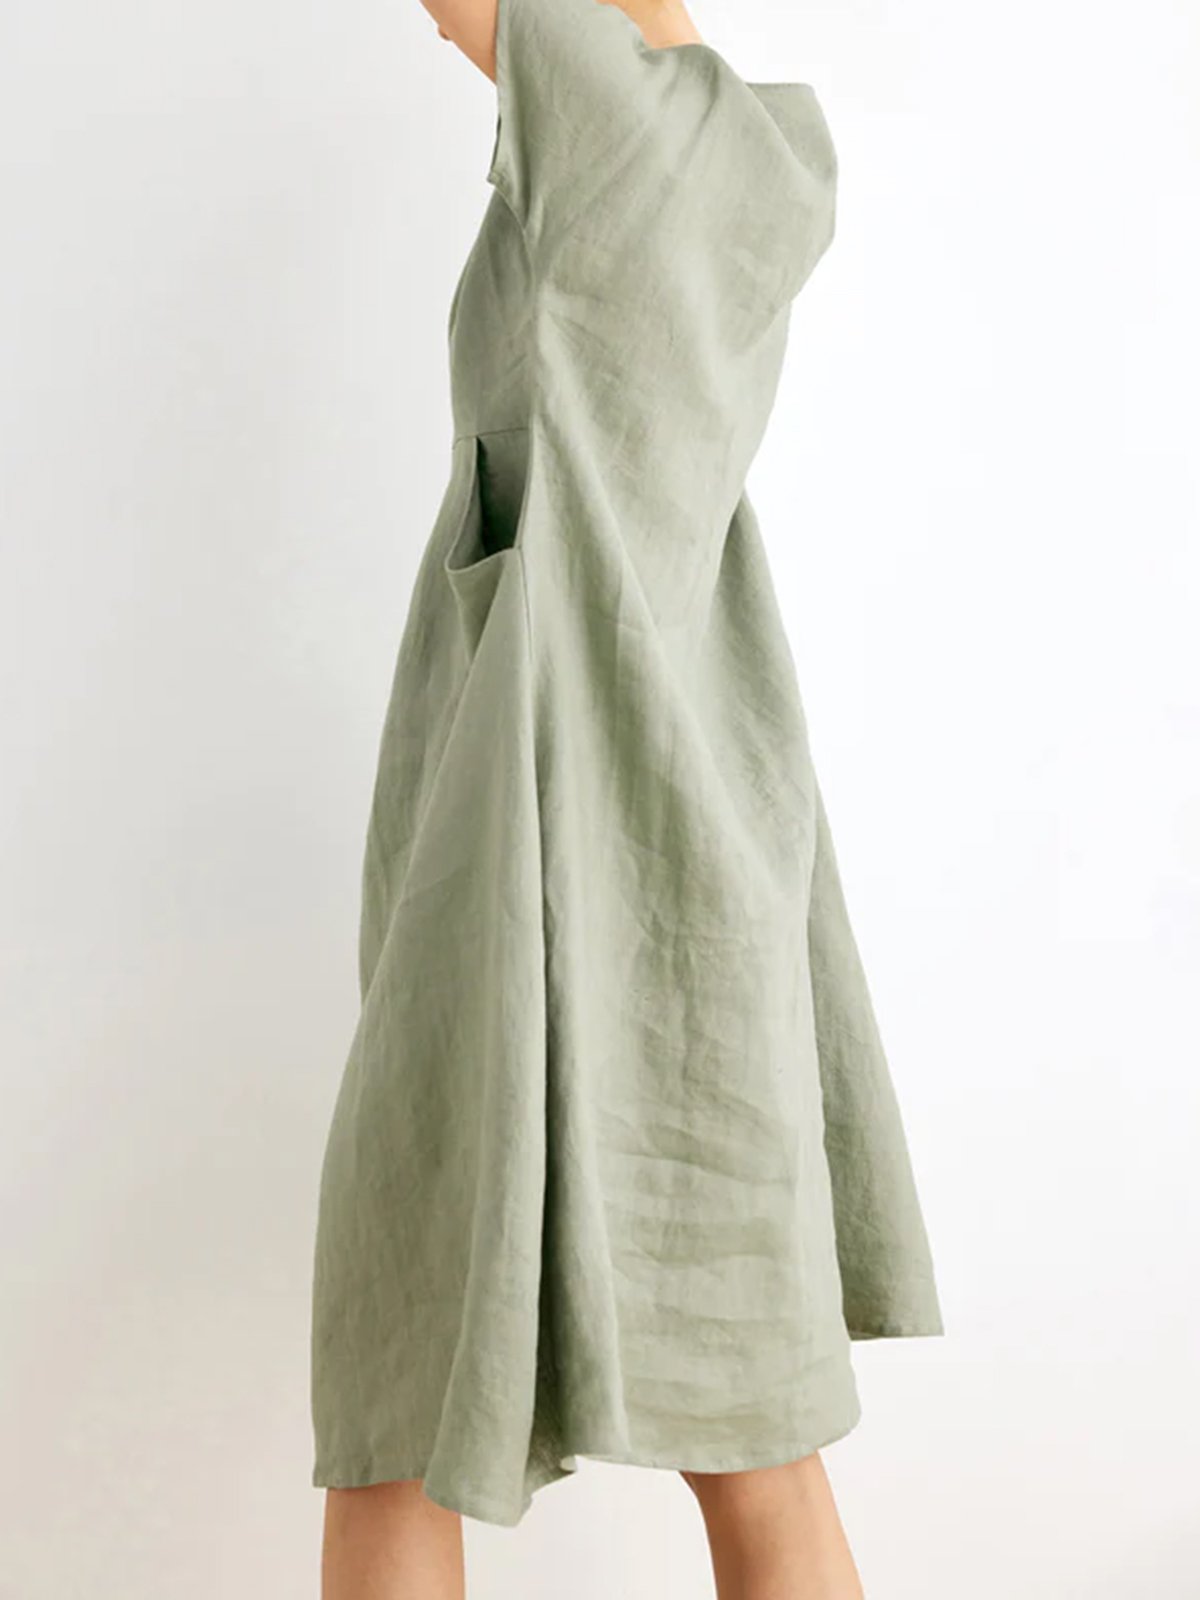 Nova 100% Linen V-neck Dress with Pockets